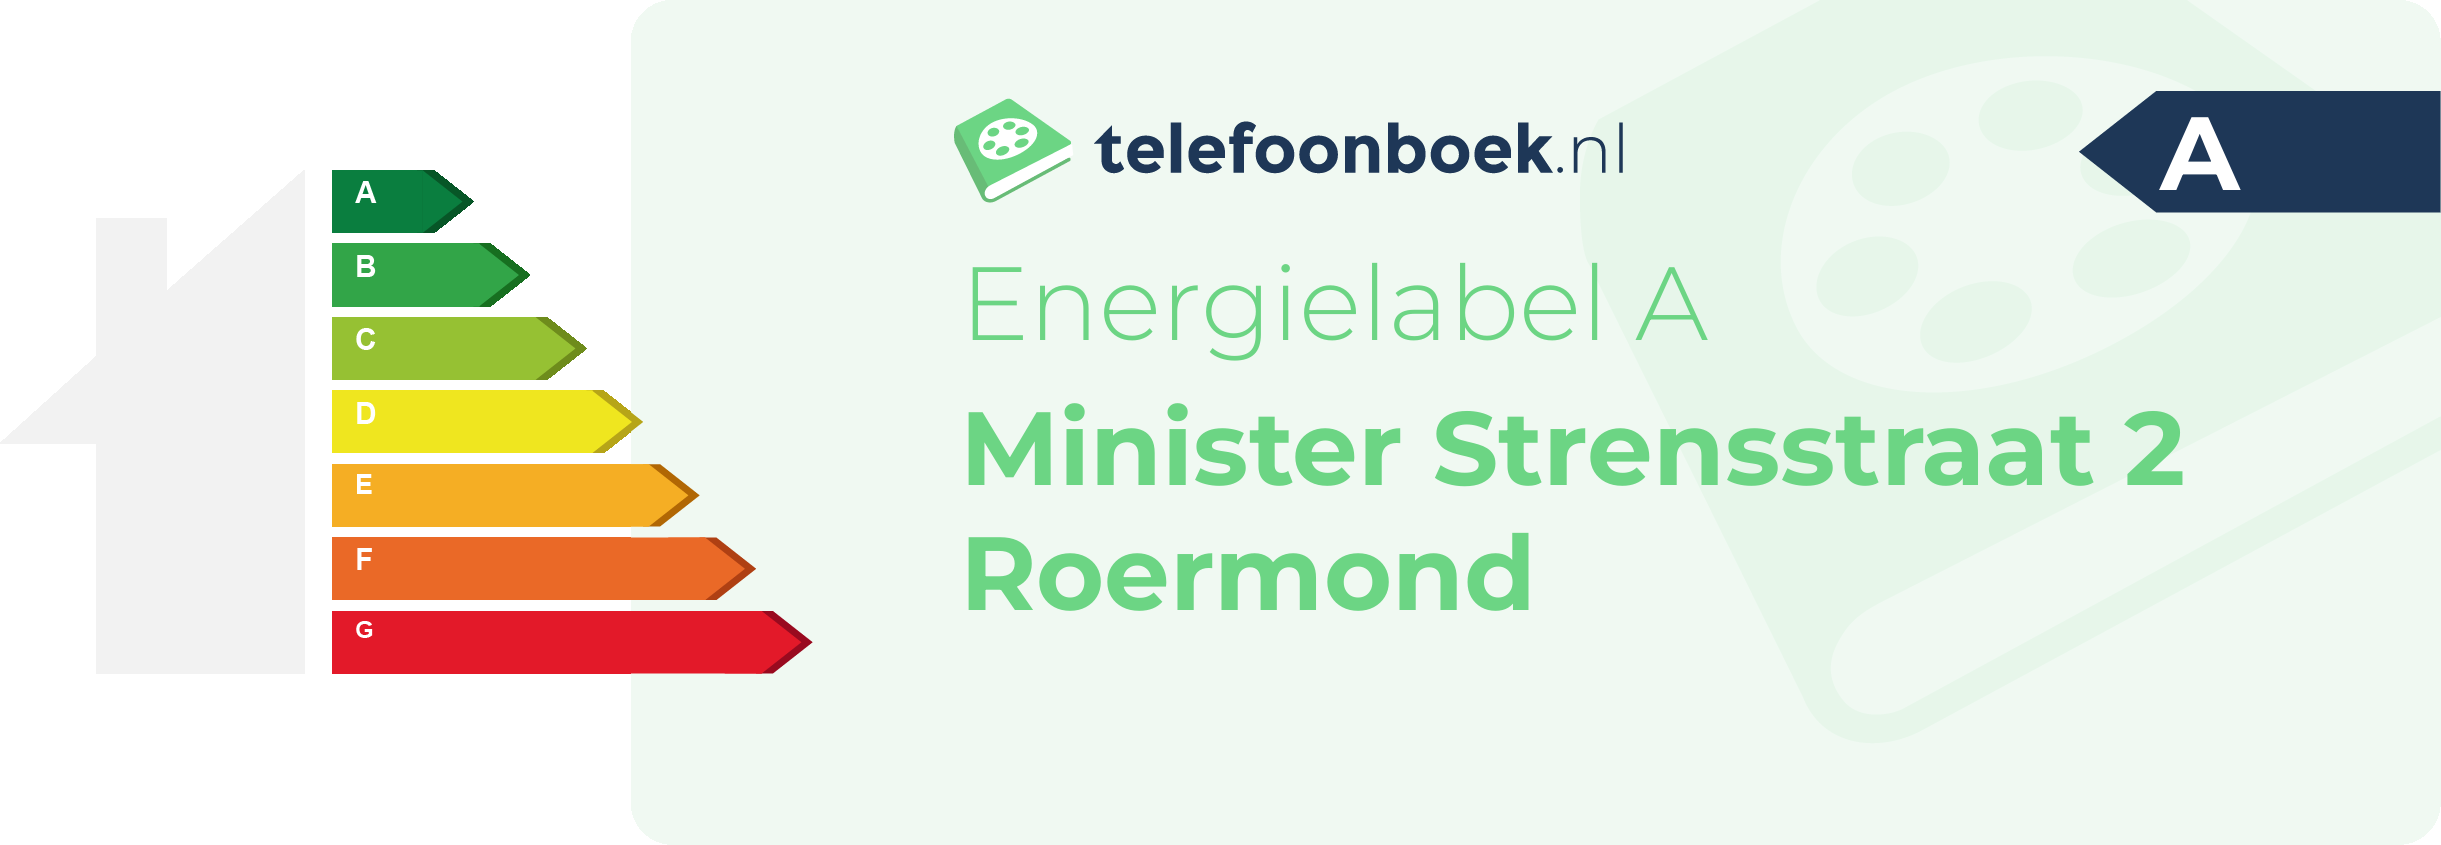 Energielabel Minister Strensstraat 2 Roermond